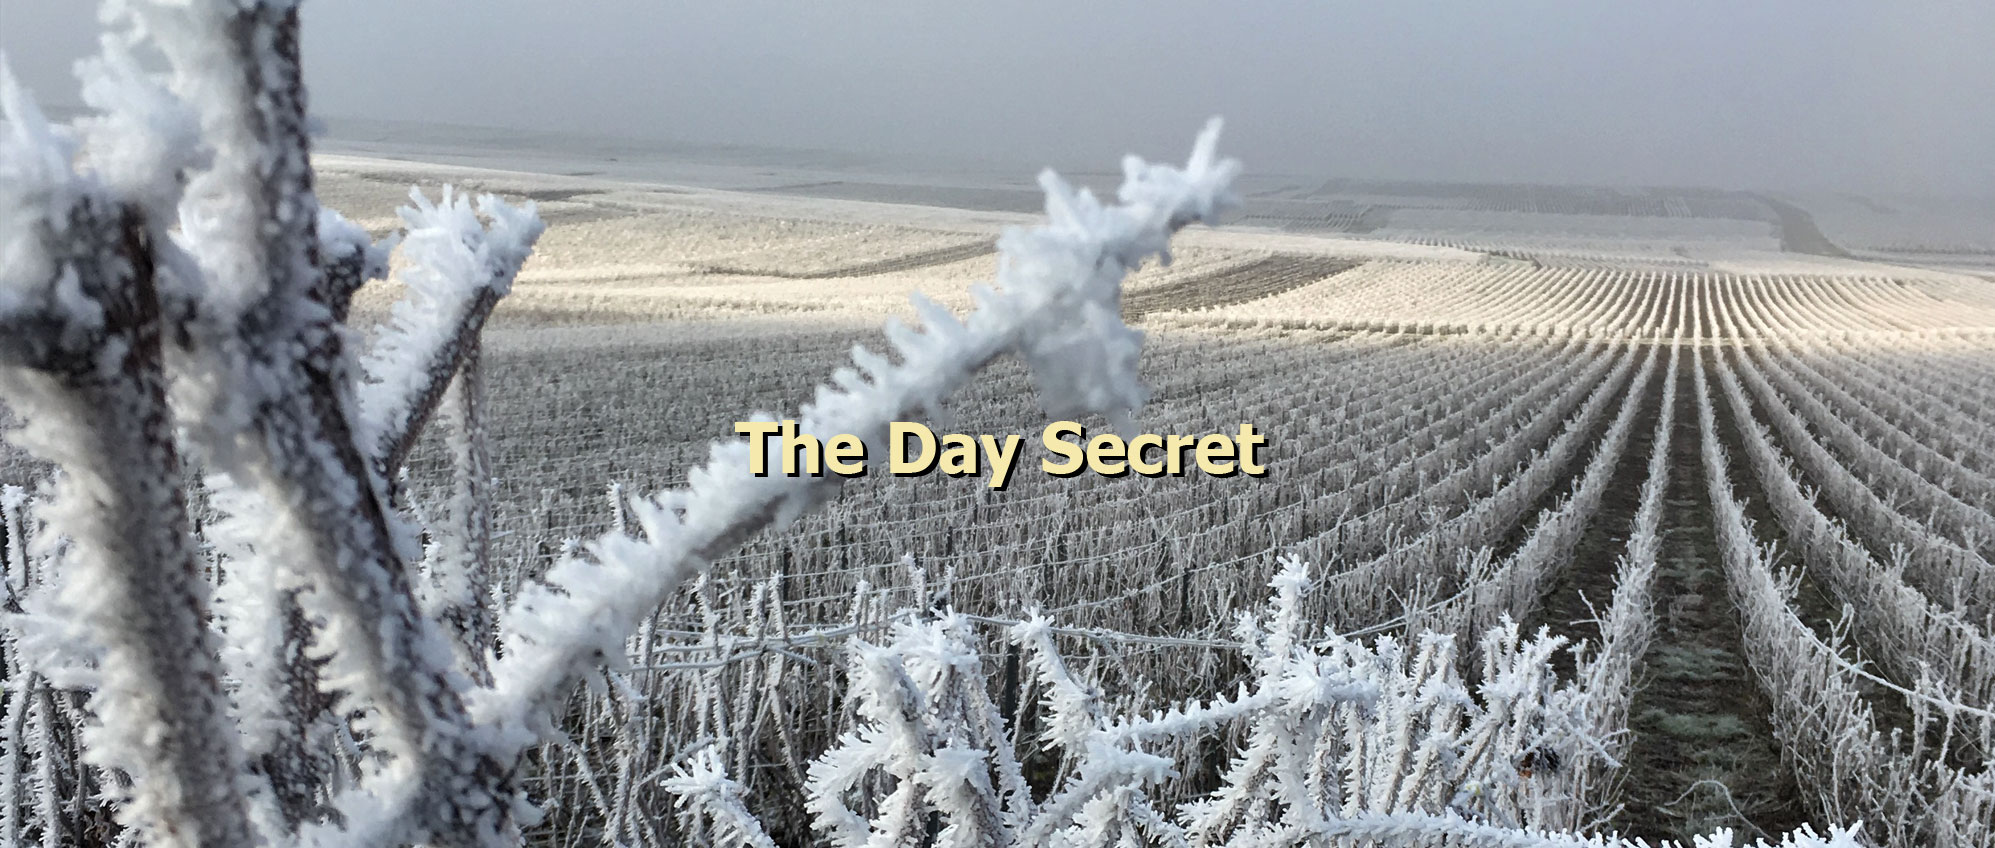 Day Secret